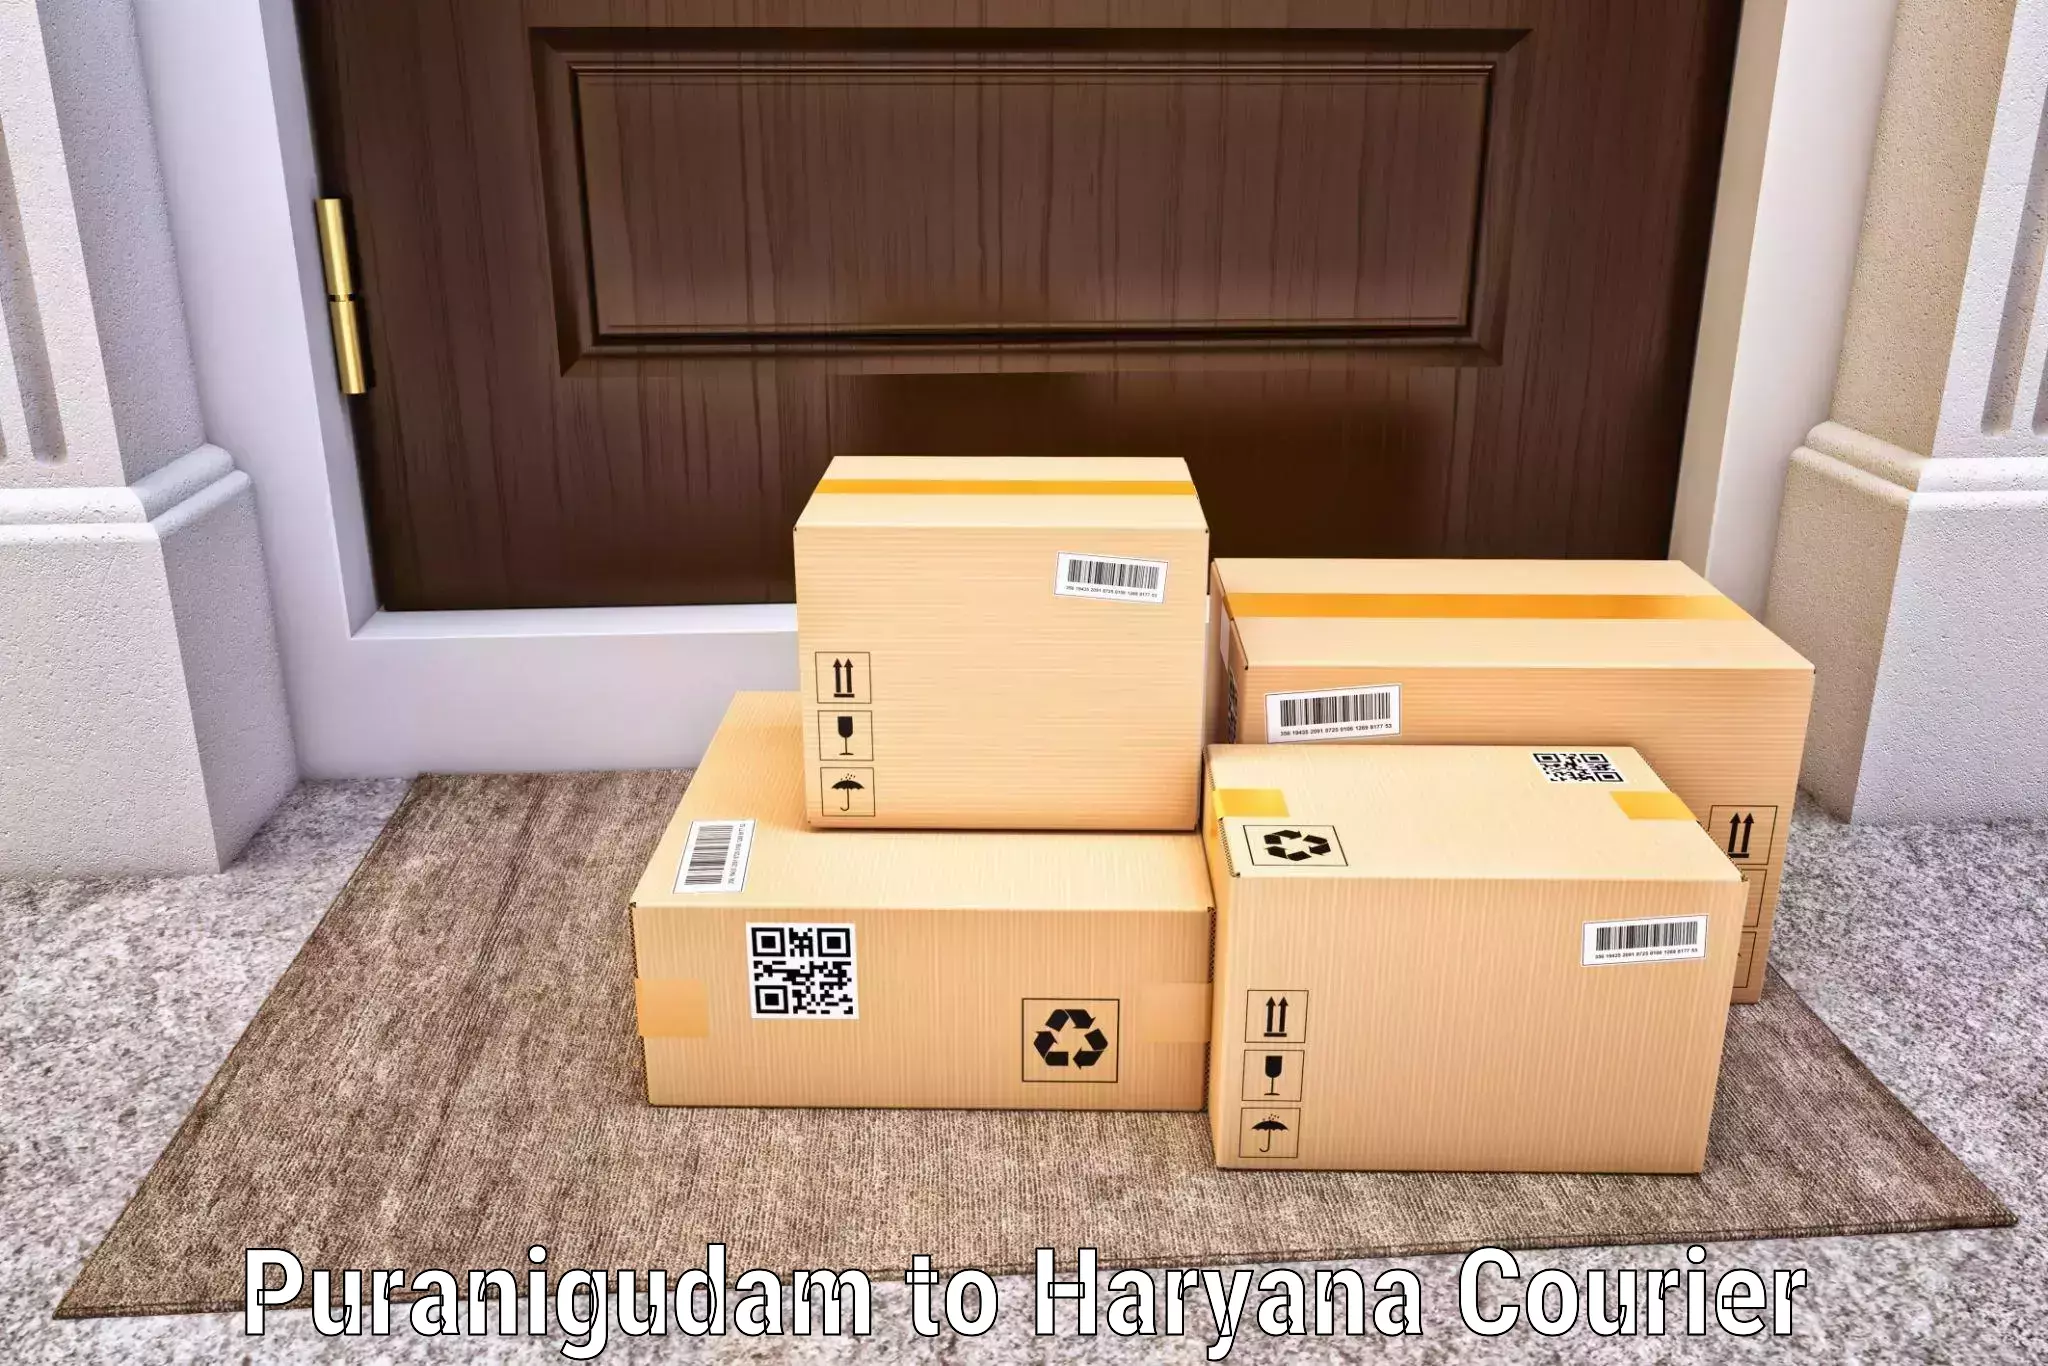 Supply chain efficiency Puranigudam to NCR Haryana